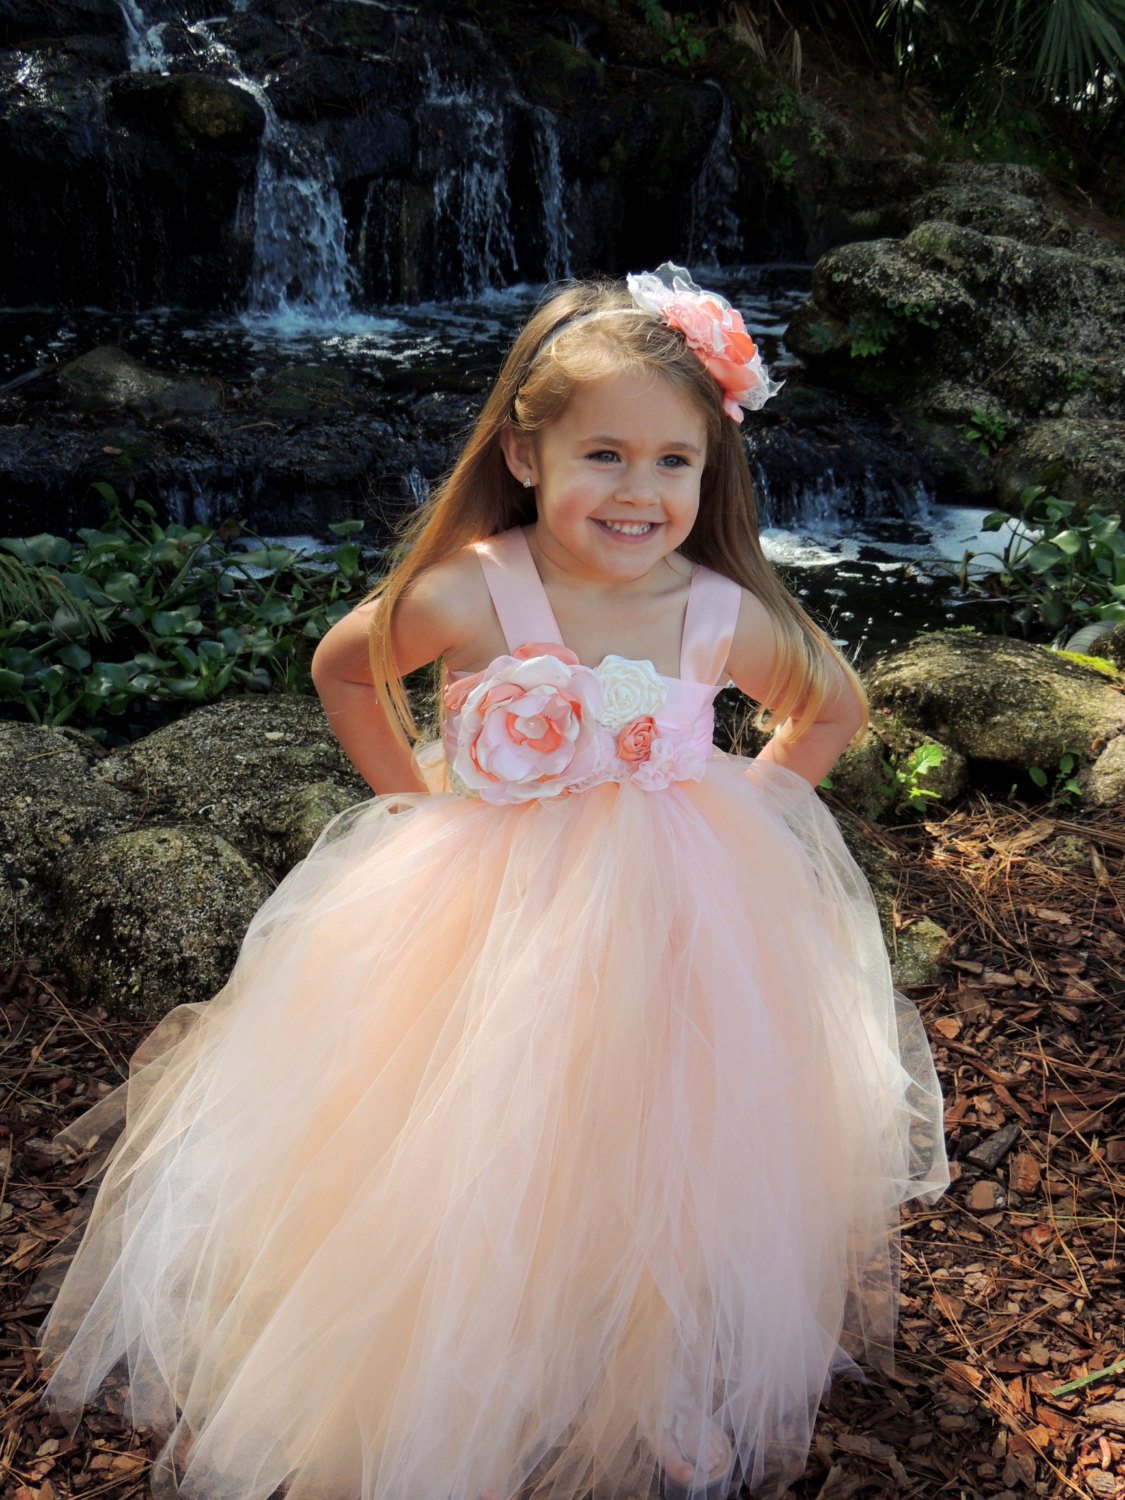 Pink, Puffy Flower Girl Dresses For Your Little Pal | | TopWeddingSites.com